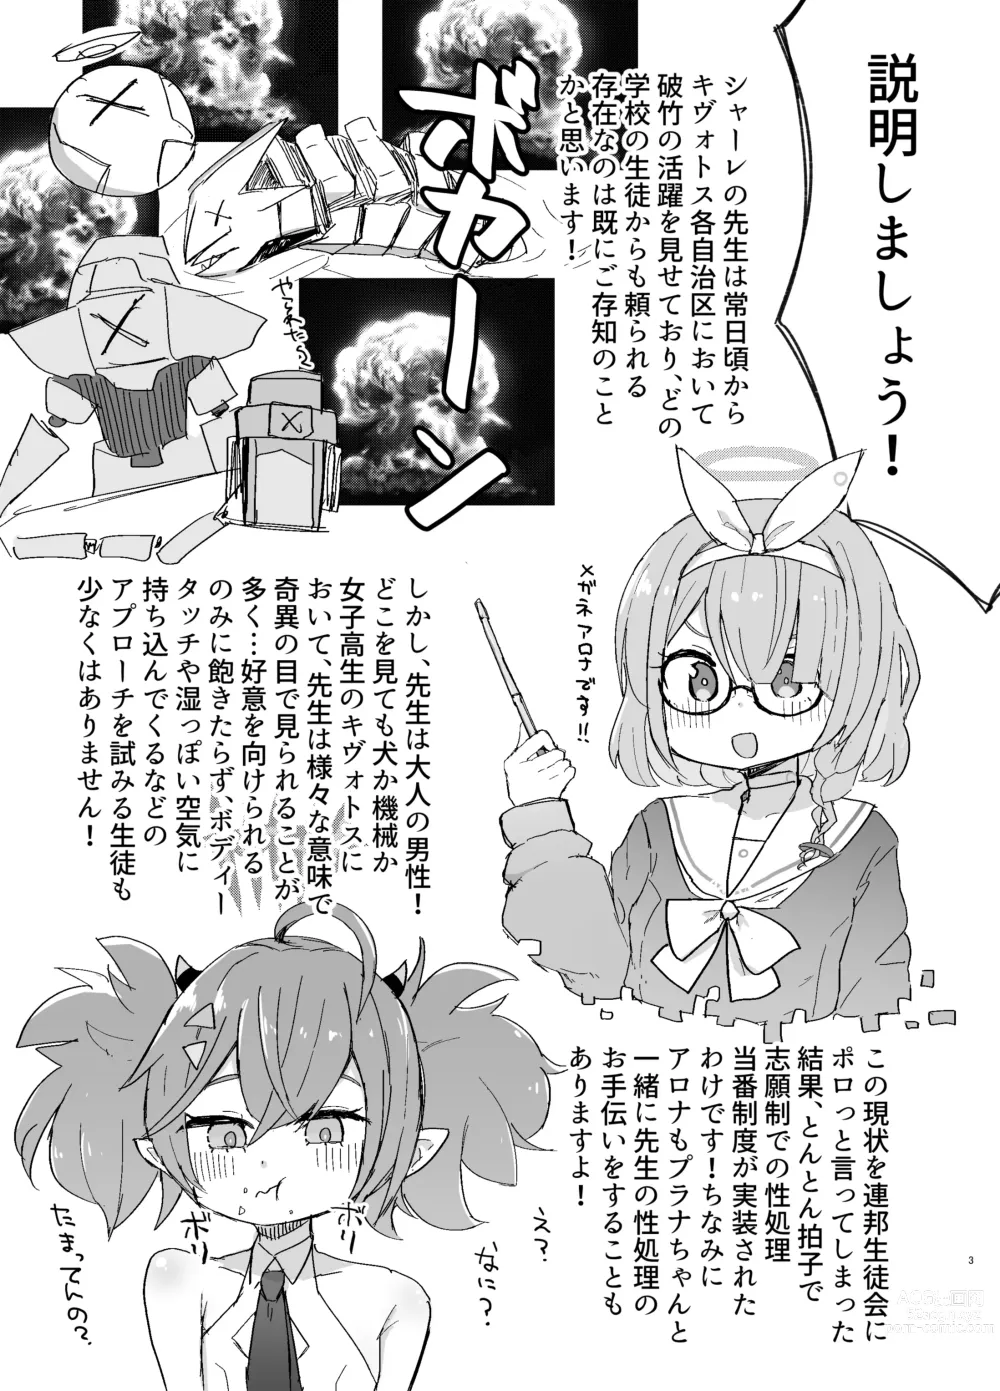 Page 2 of doujinshi Schale Seisyori Toubann Nisshi